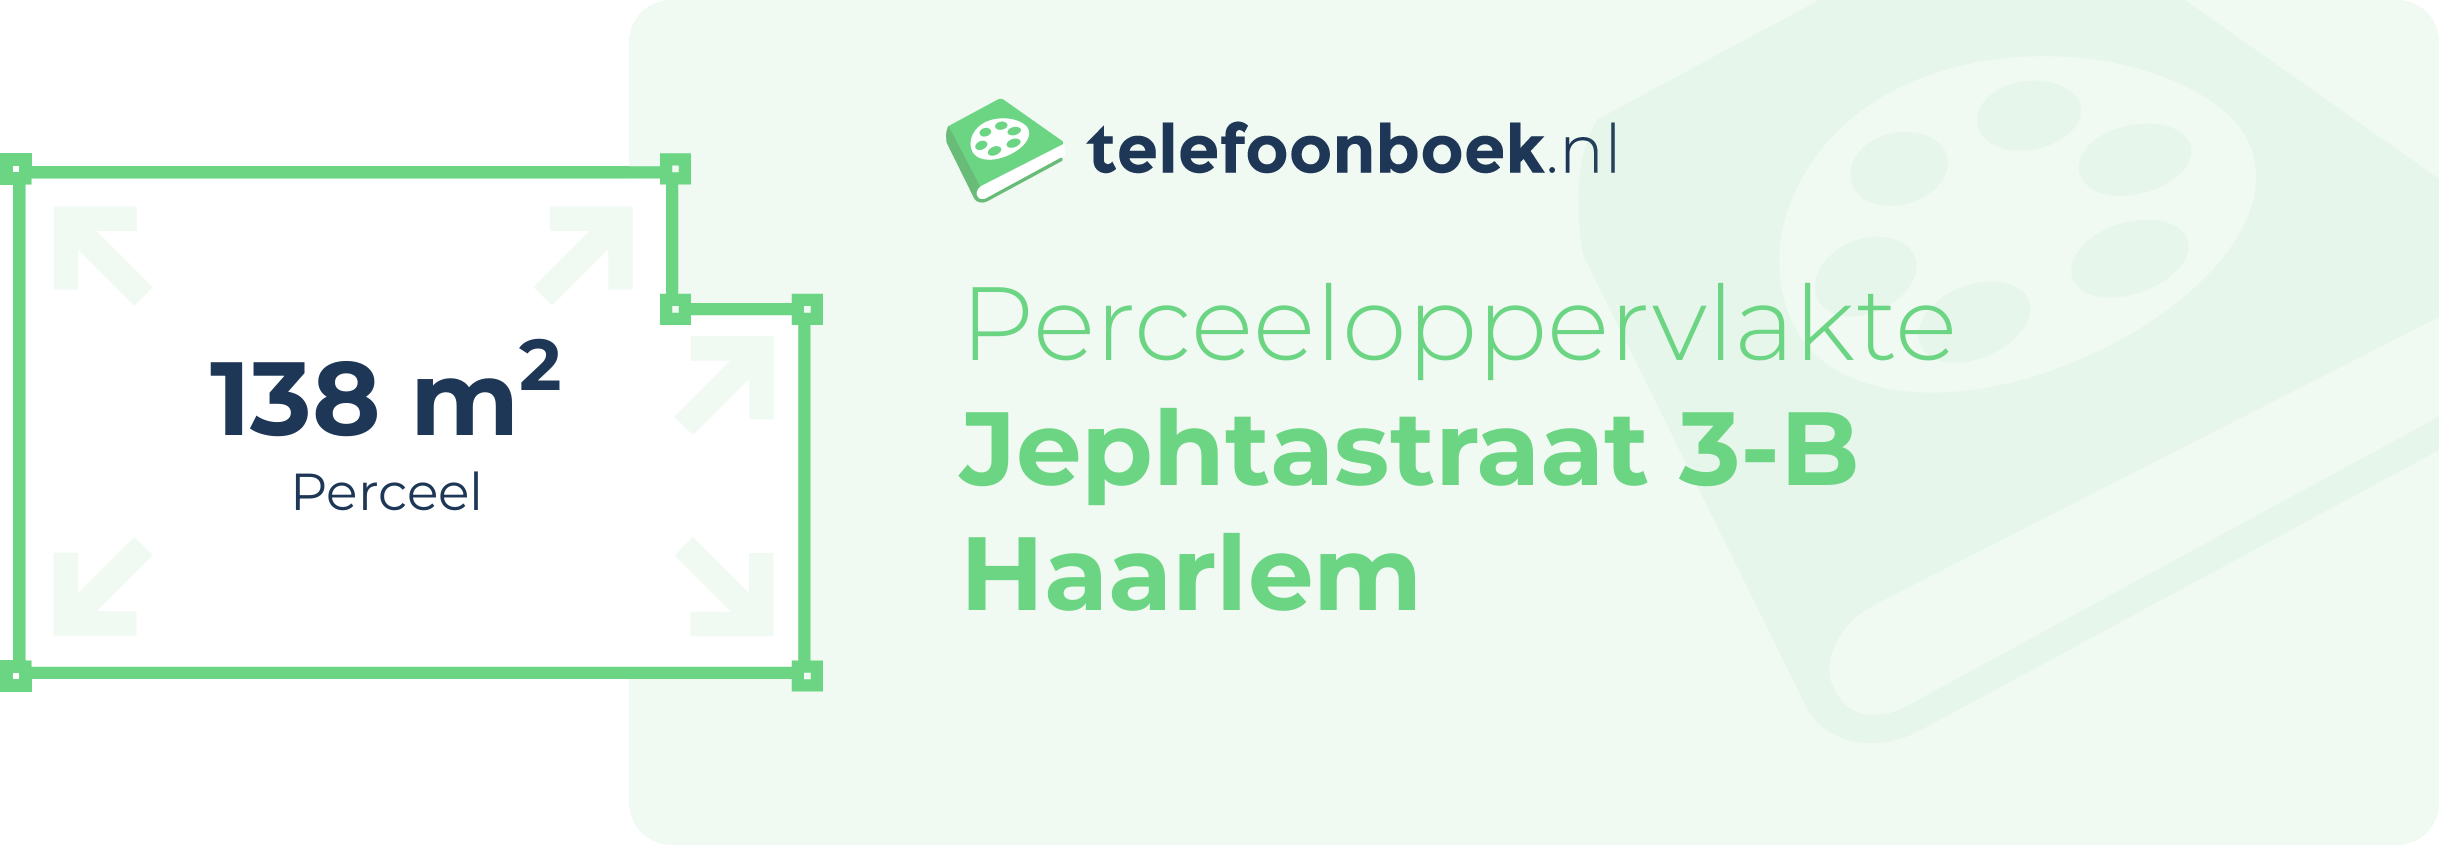 Perceeloppervlakte Jephtastraat 3-B Haarlem